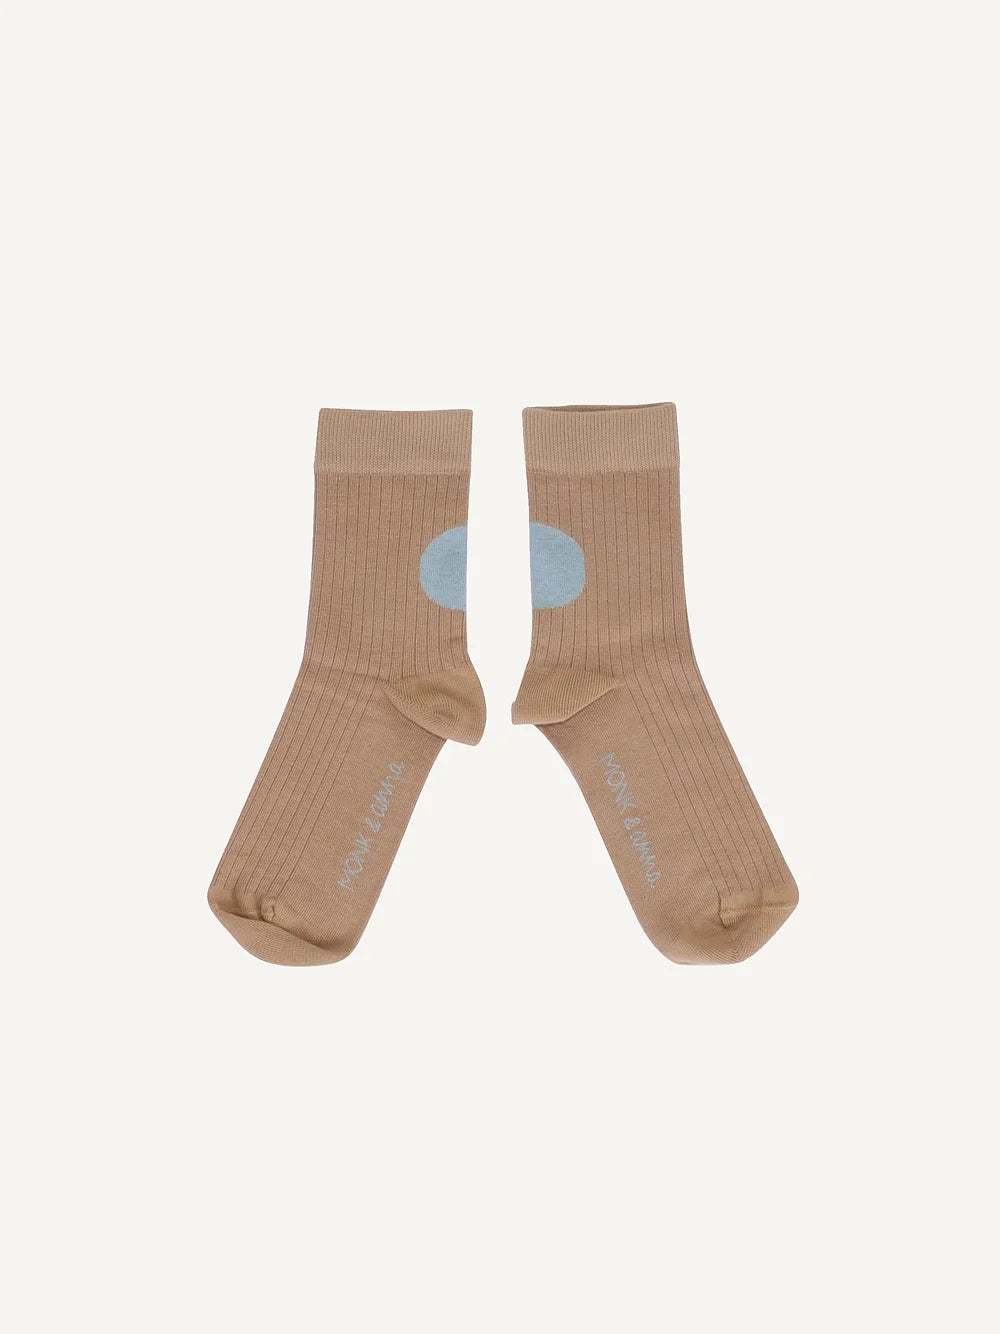 Socks - Graphic Shape - Sand